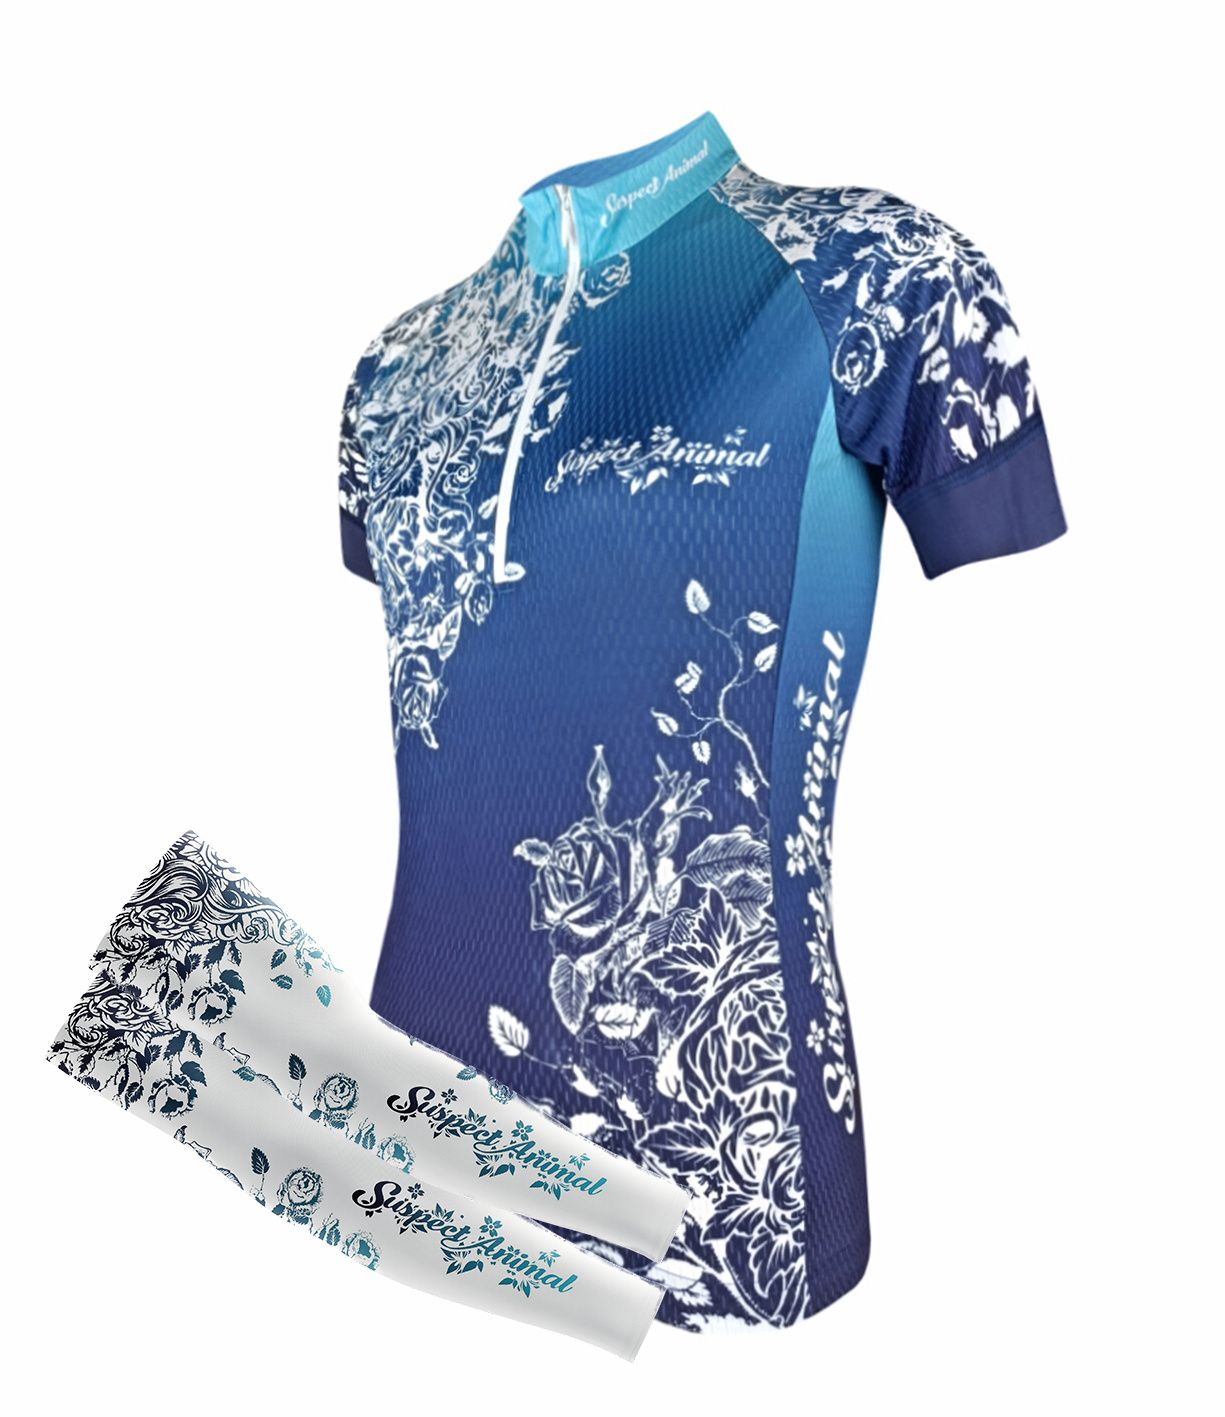 Dámský cyklistický dres Cykloanimal Clara modrá + návleky na ruce bílá